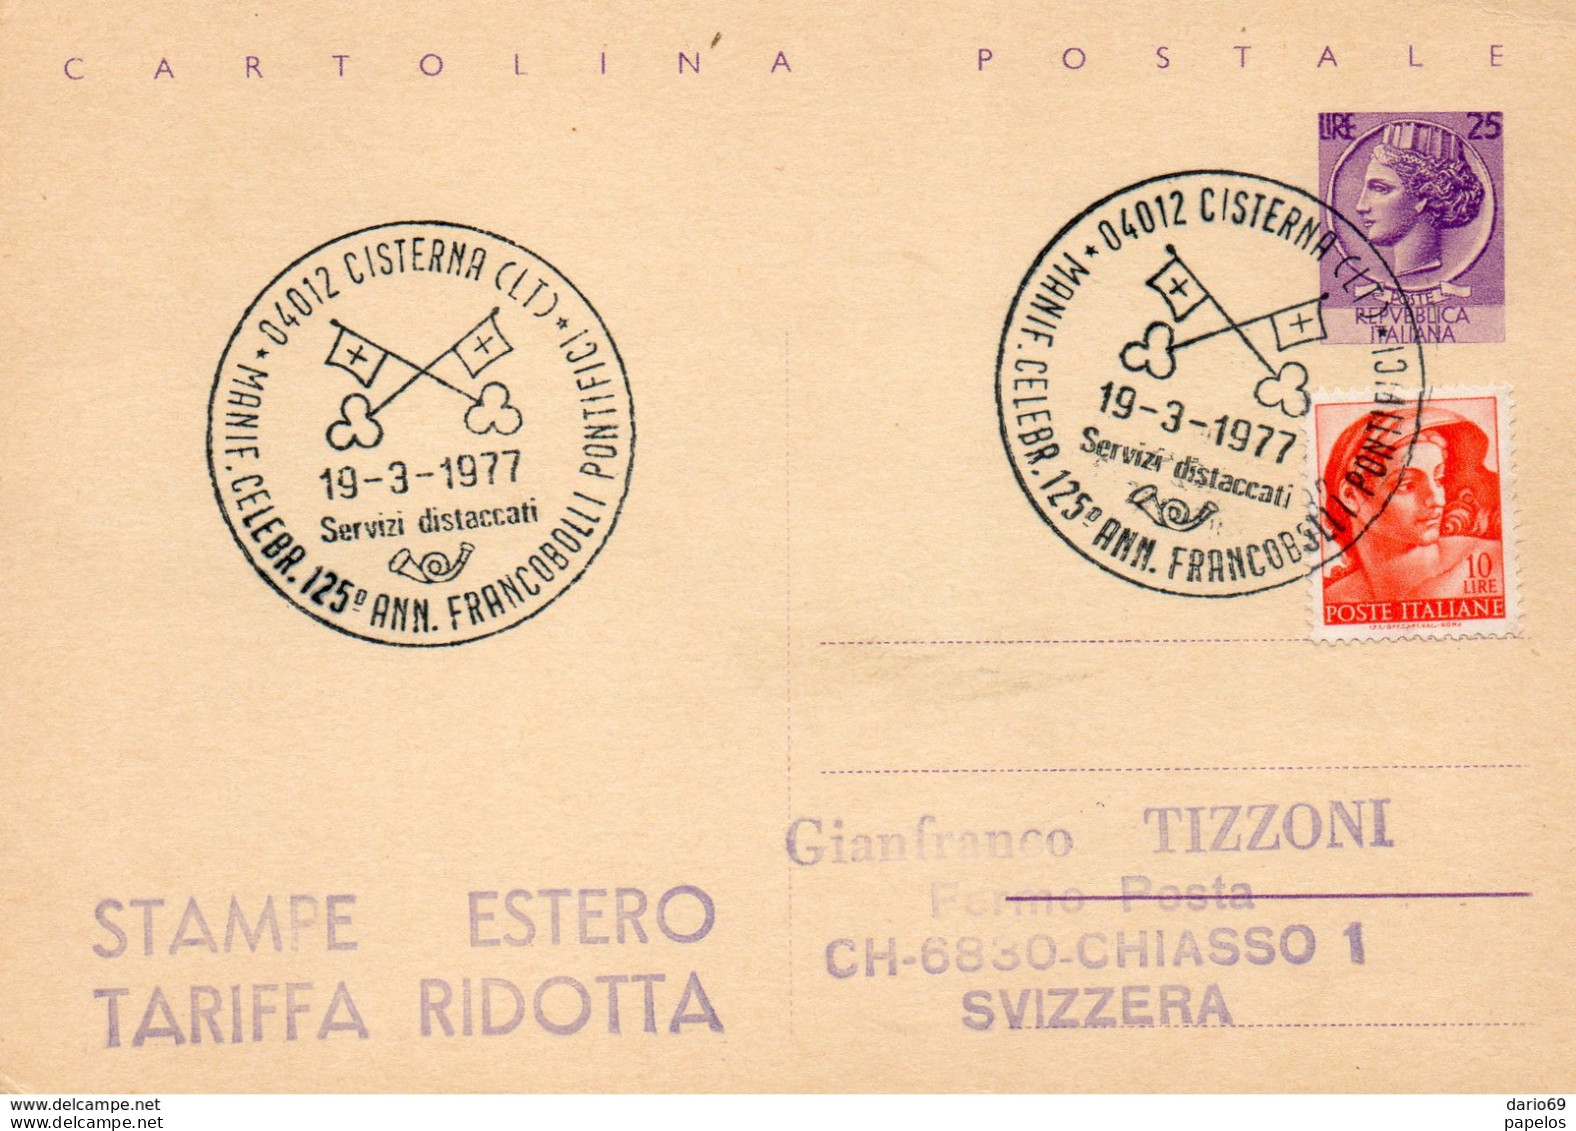 1977 CARTOLINA CON ANNULLO  CISTERNA LATINA  CEL. FRANCOBOLLO PONTIFICIO - Ganzsachen